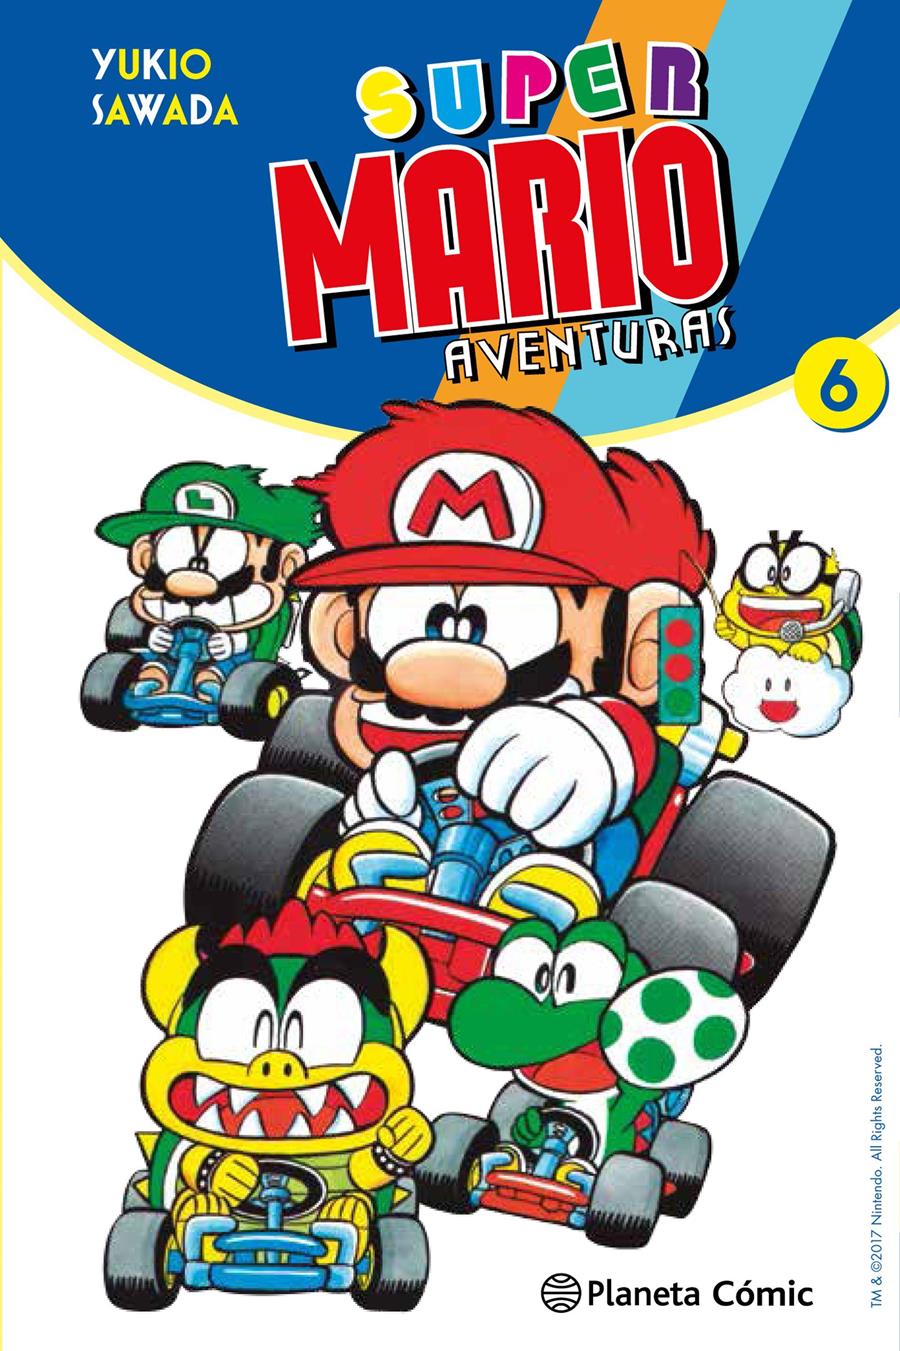 Super Mario nº 06 | N0617-PLAN26 | Yukio Sawada | Terra de Còmic - Tu tienda de cómics online especializada en cómics, manga y merchandising